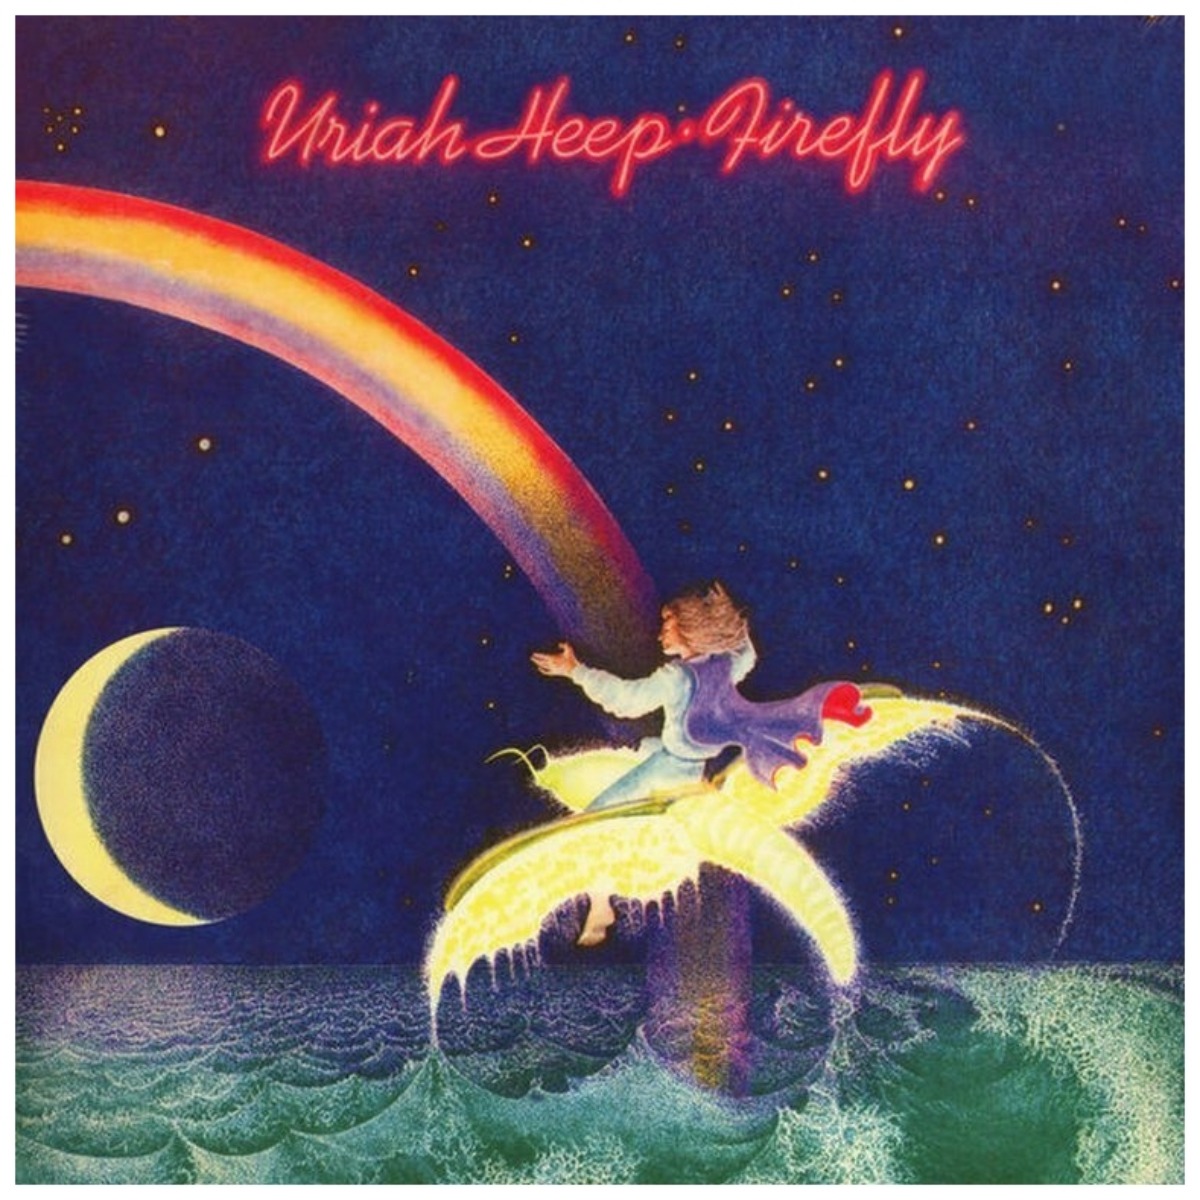 Couverture de l'album "Firefly" d'Uriah Heep